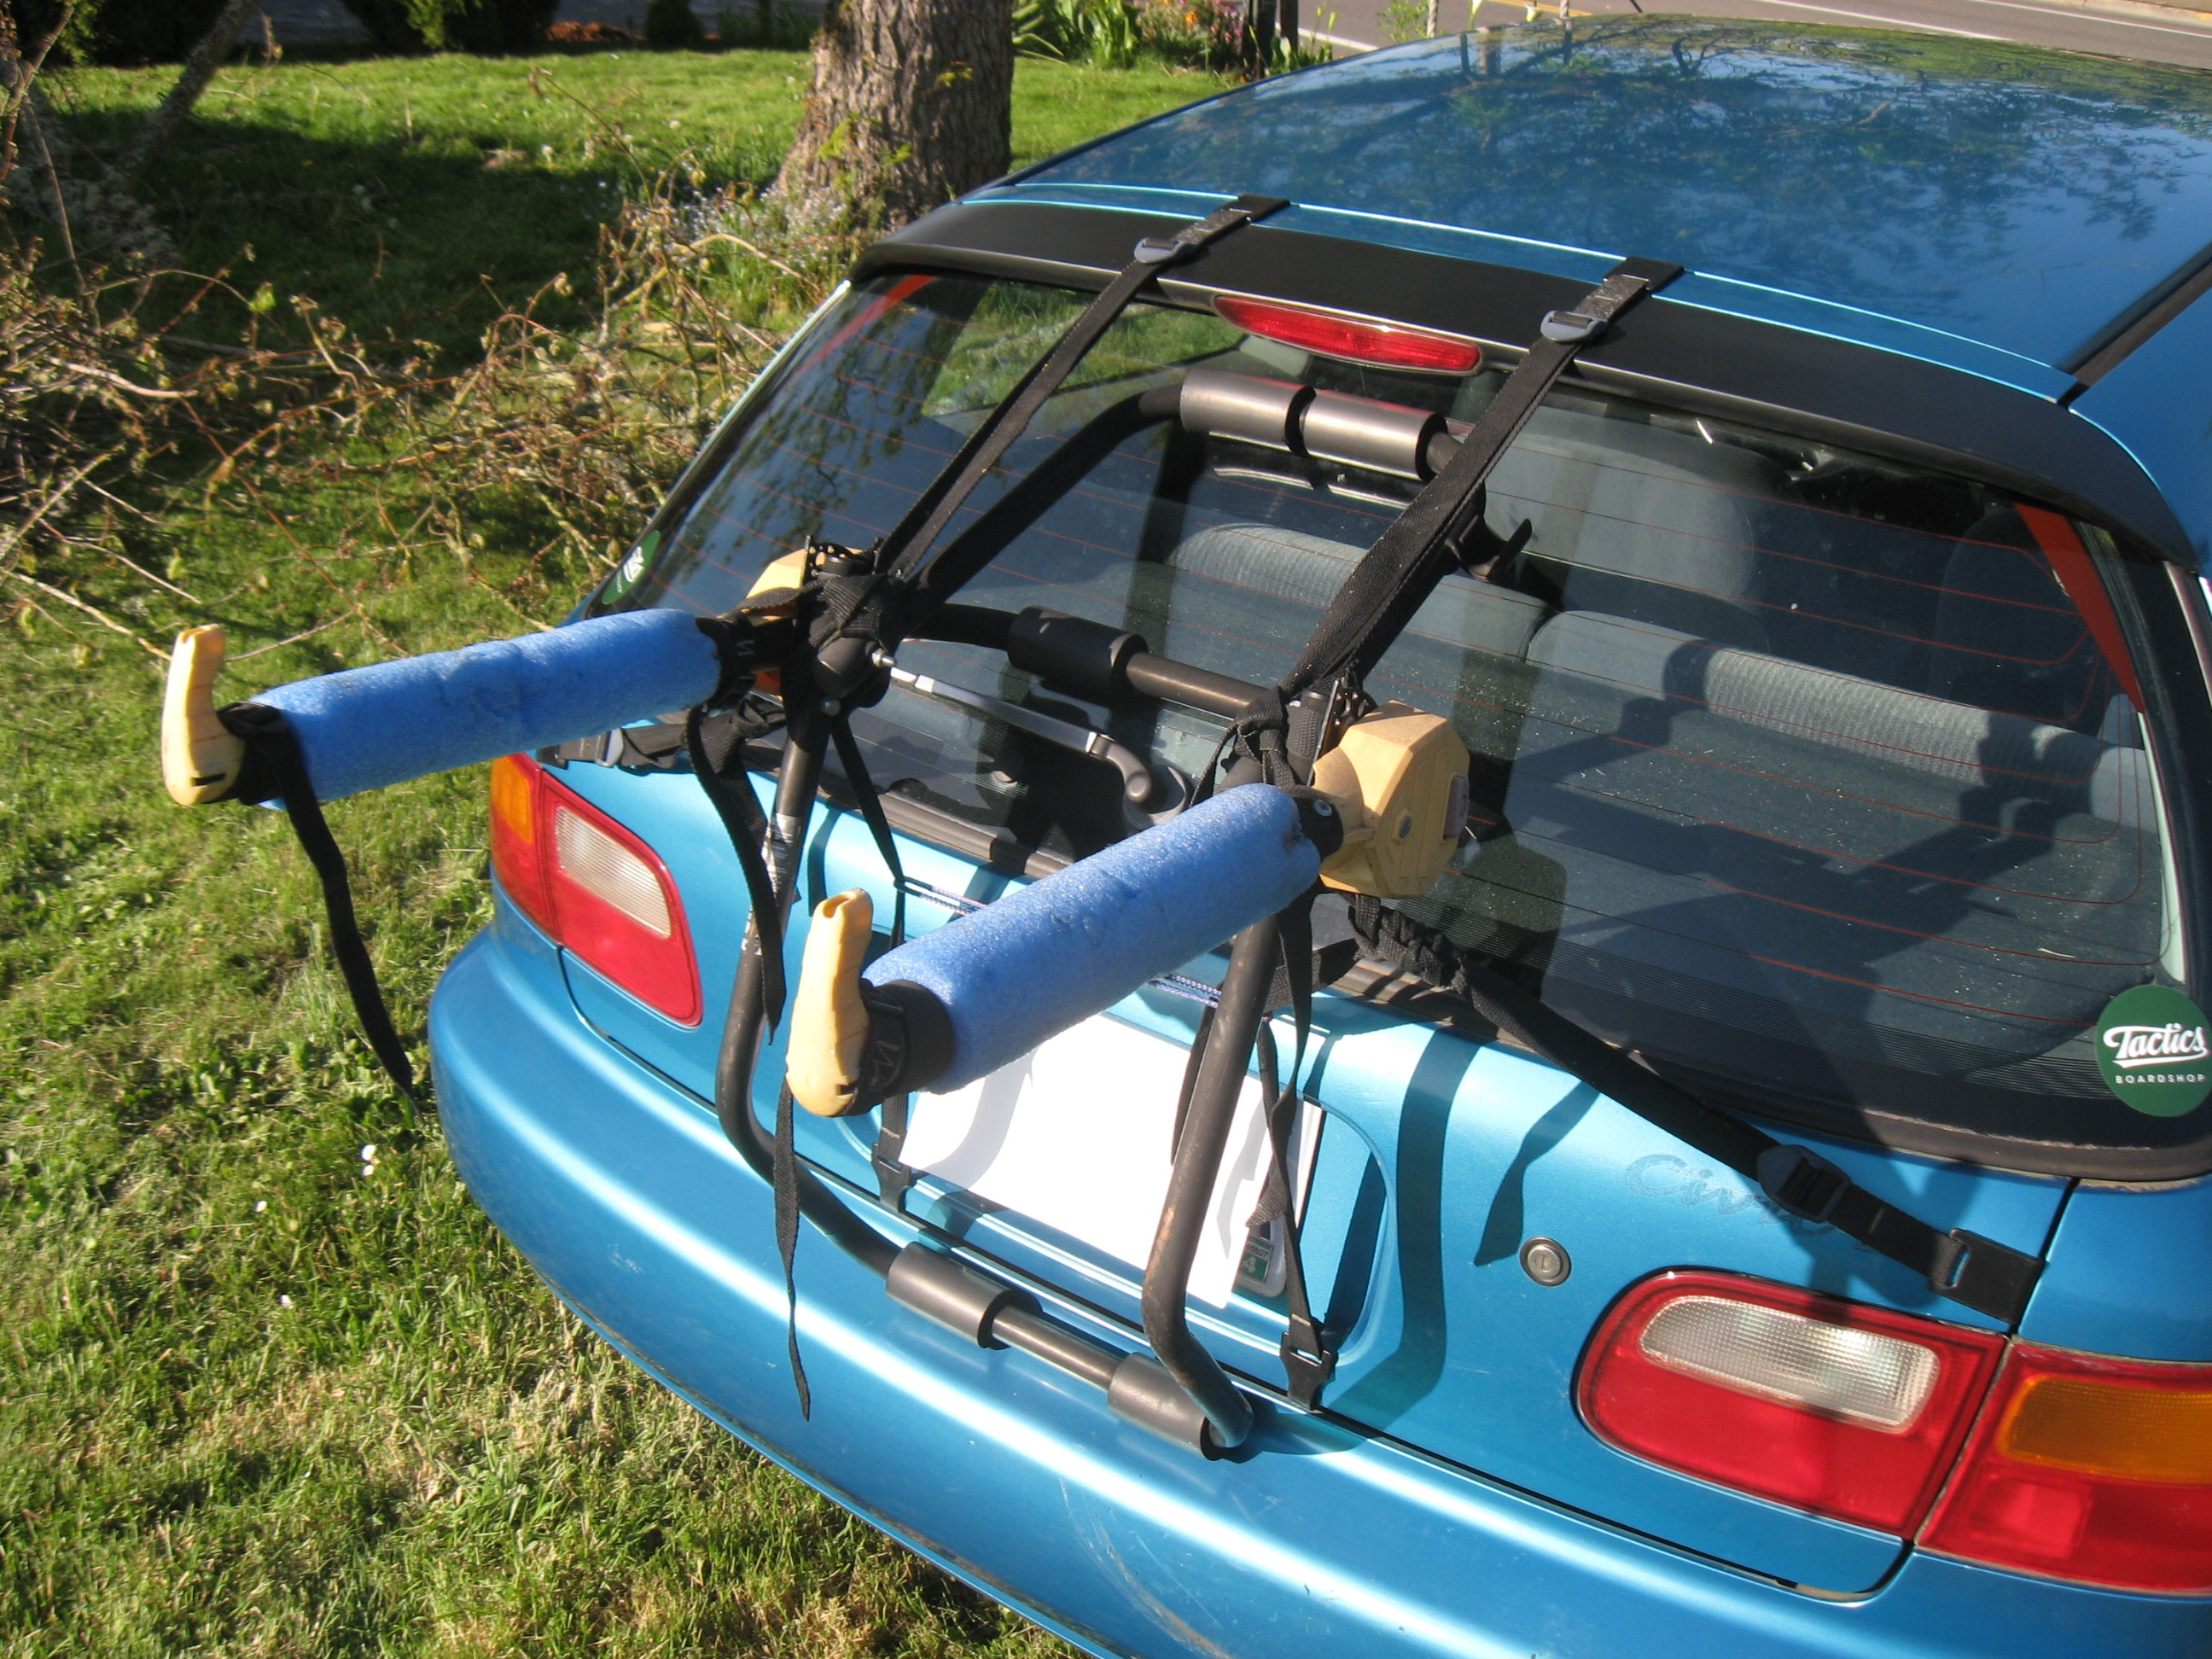 Best ideas about Bike Rack DIY
. Save or Pin DiY Bike Racks Singletracks Mountain Bike News Now.